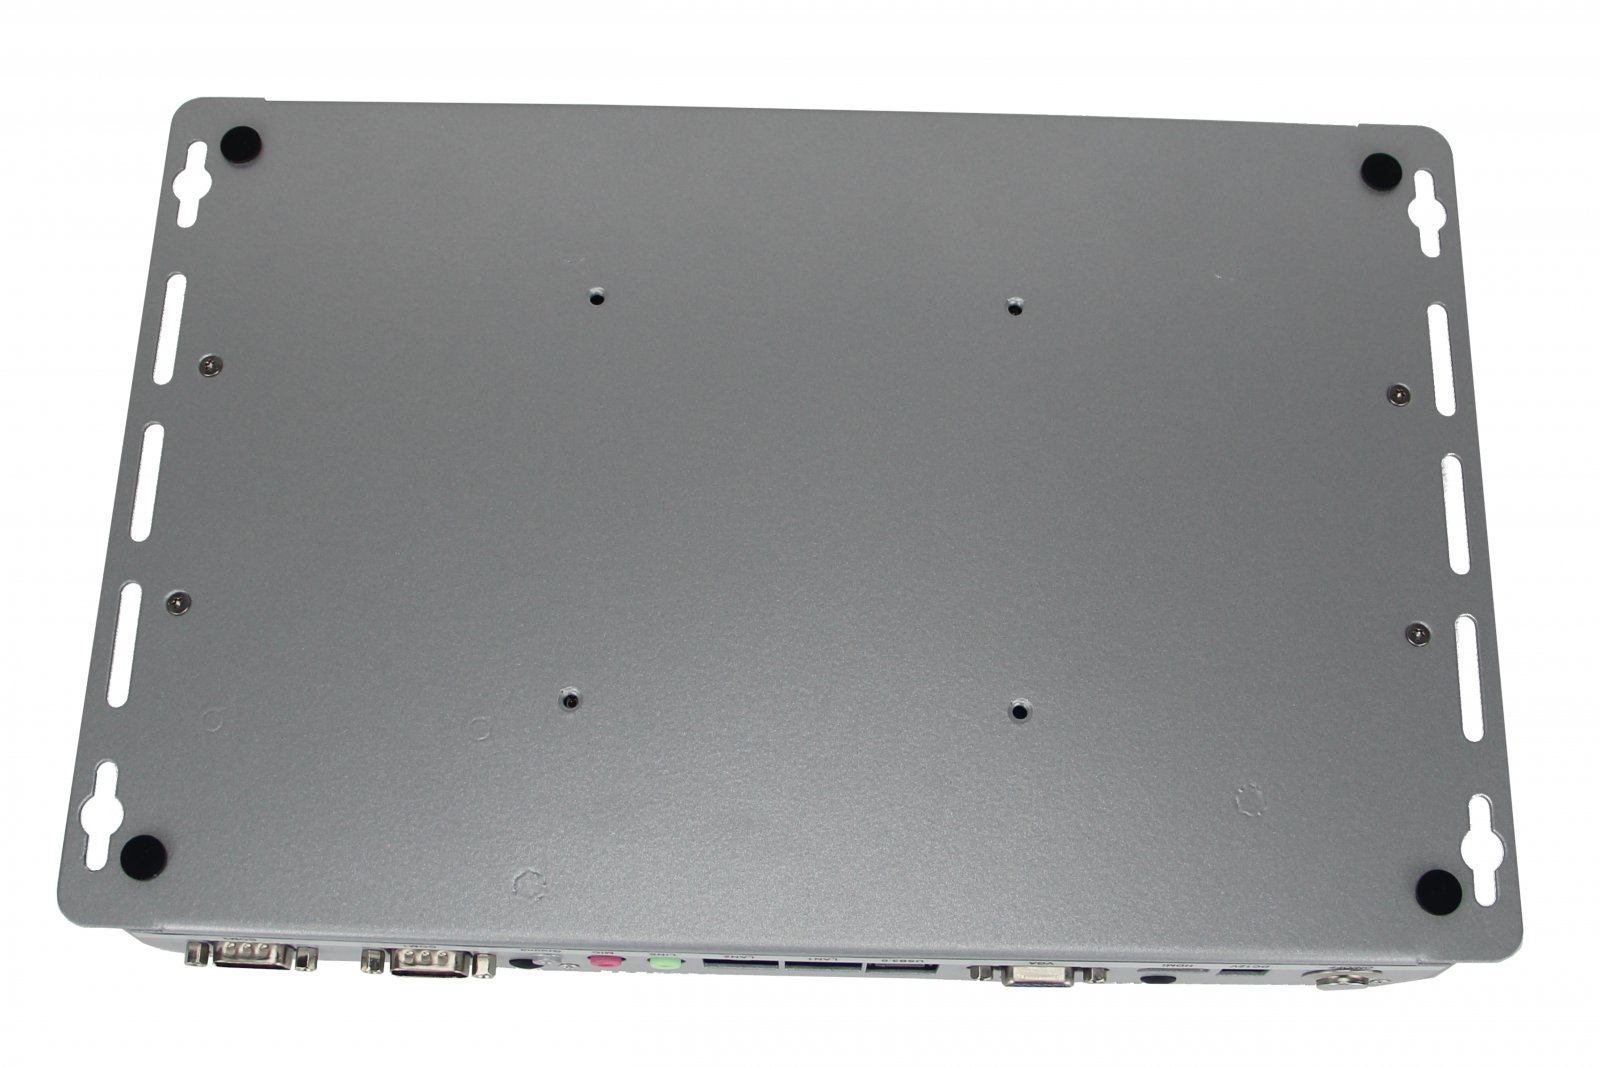 Minimaker BBPC-K05 (i7-7500U) - Powerful resistant industrial mini computer (Intel Core i7), 6x COM RS232 and 2x LAN